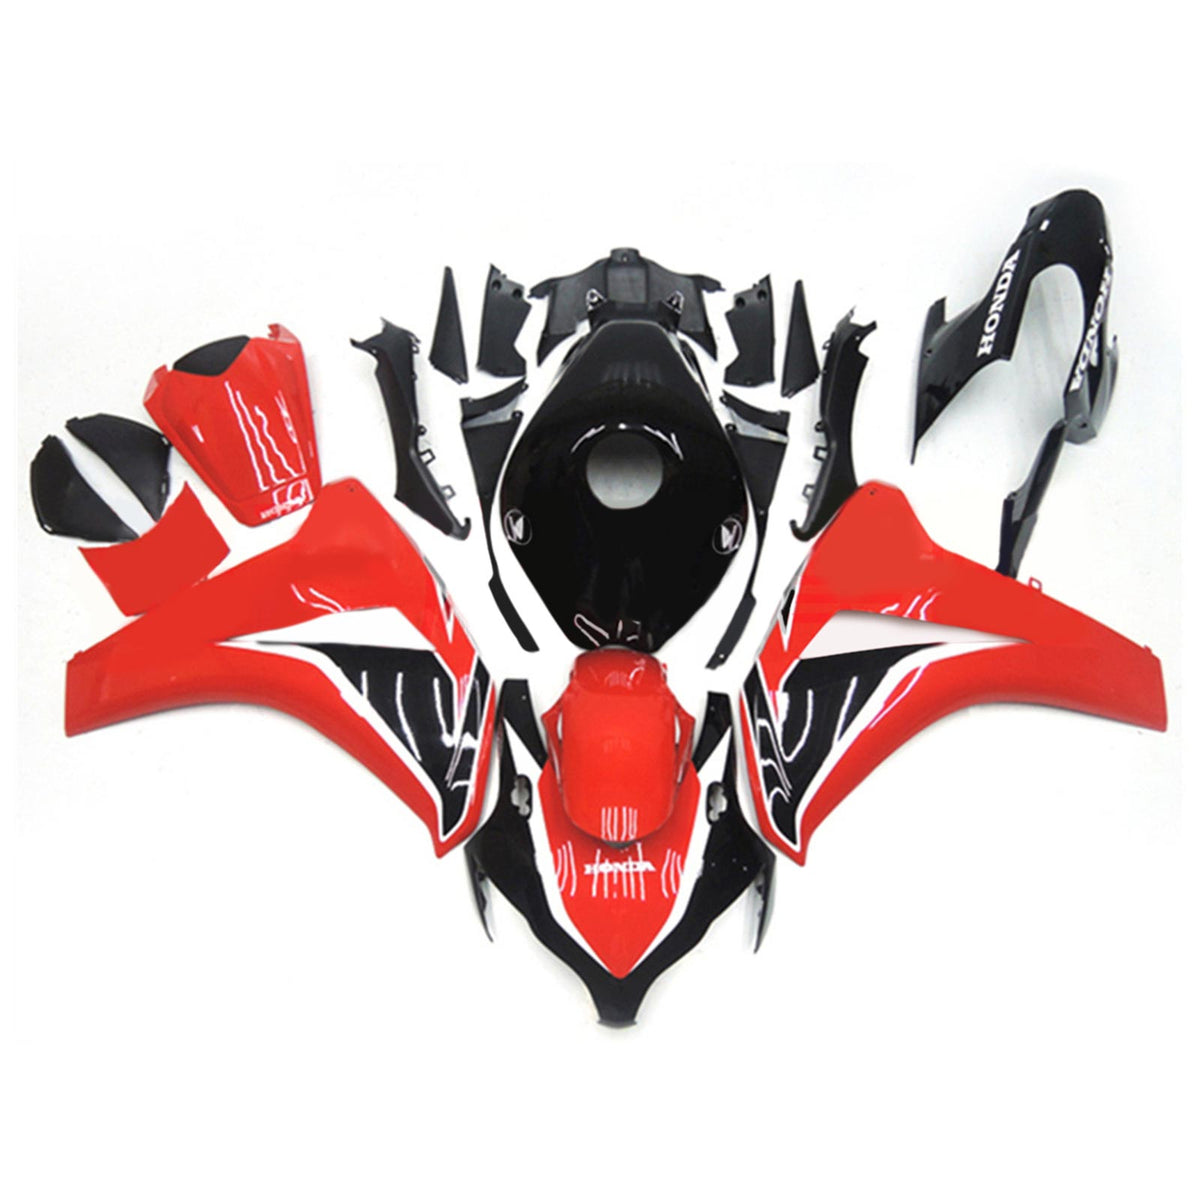 Amotopart 2008-2011 Kit carena Honda CBR1000RR rosso lucido e nero